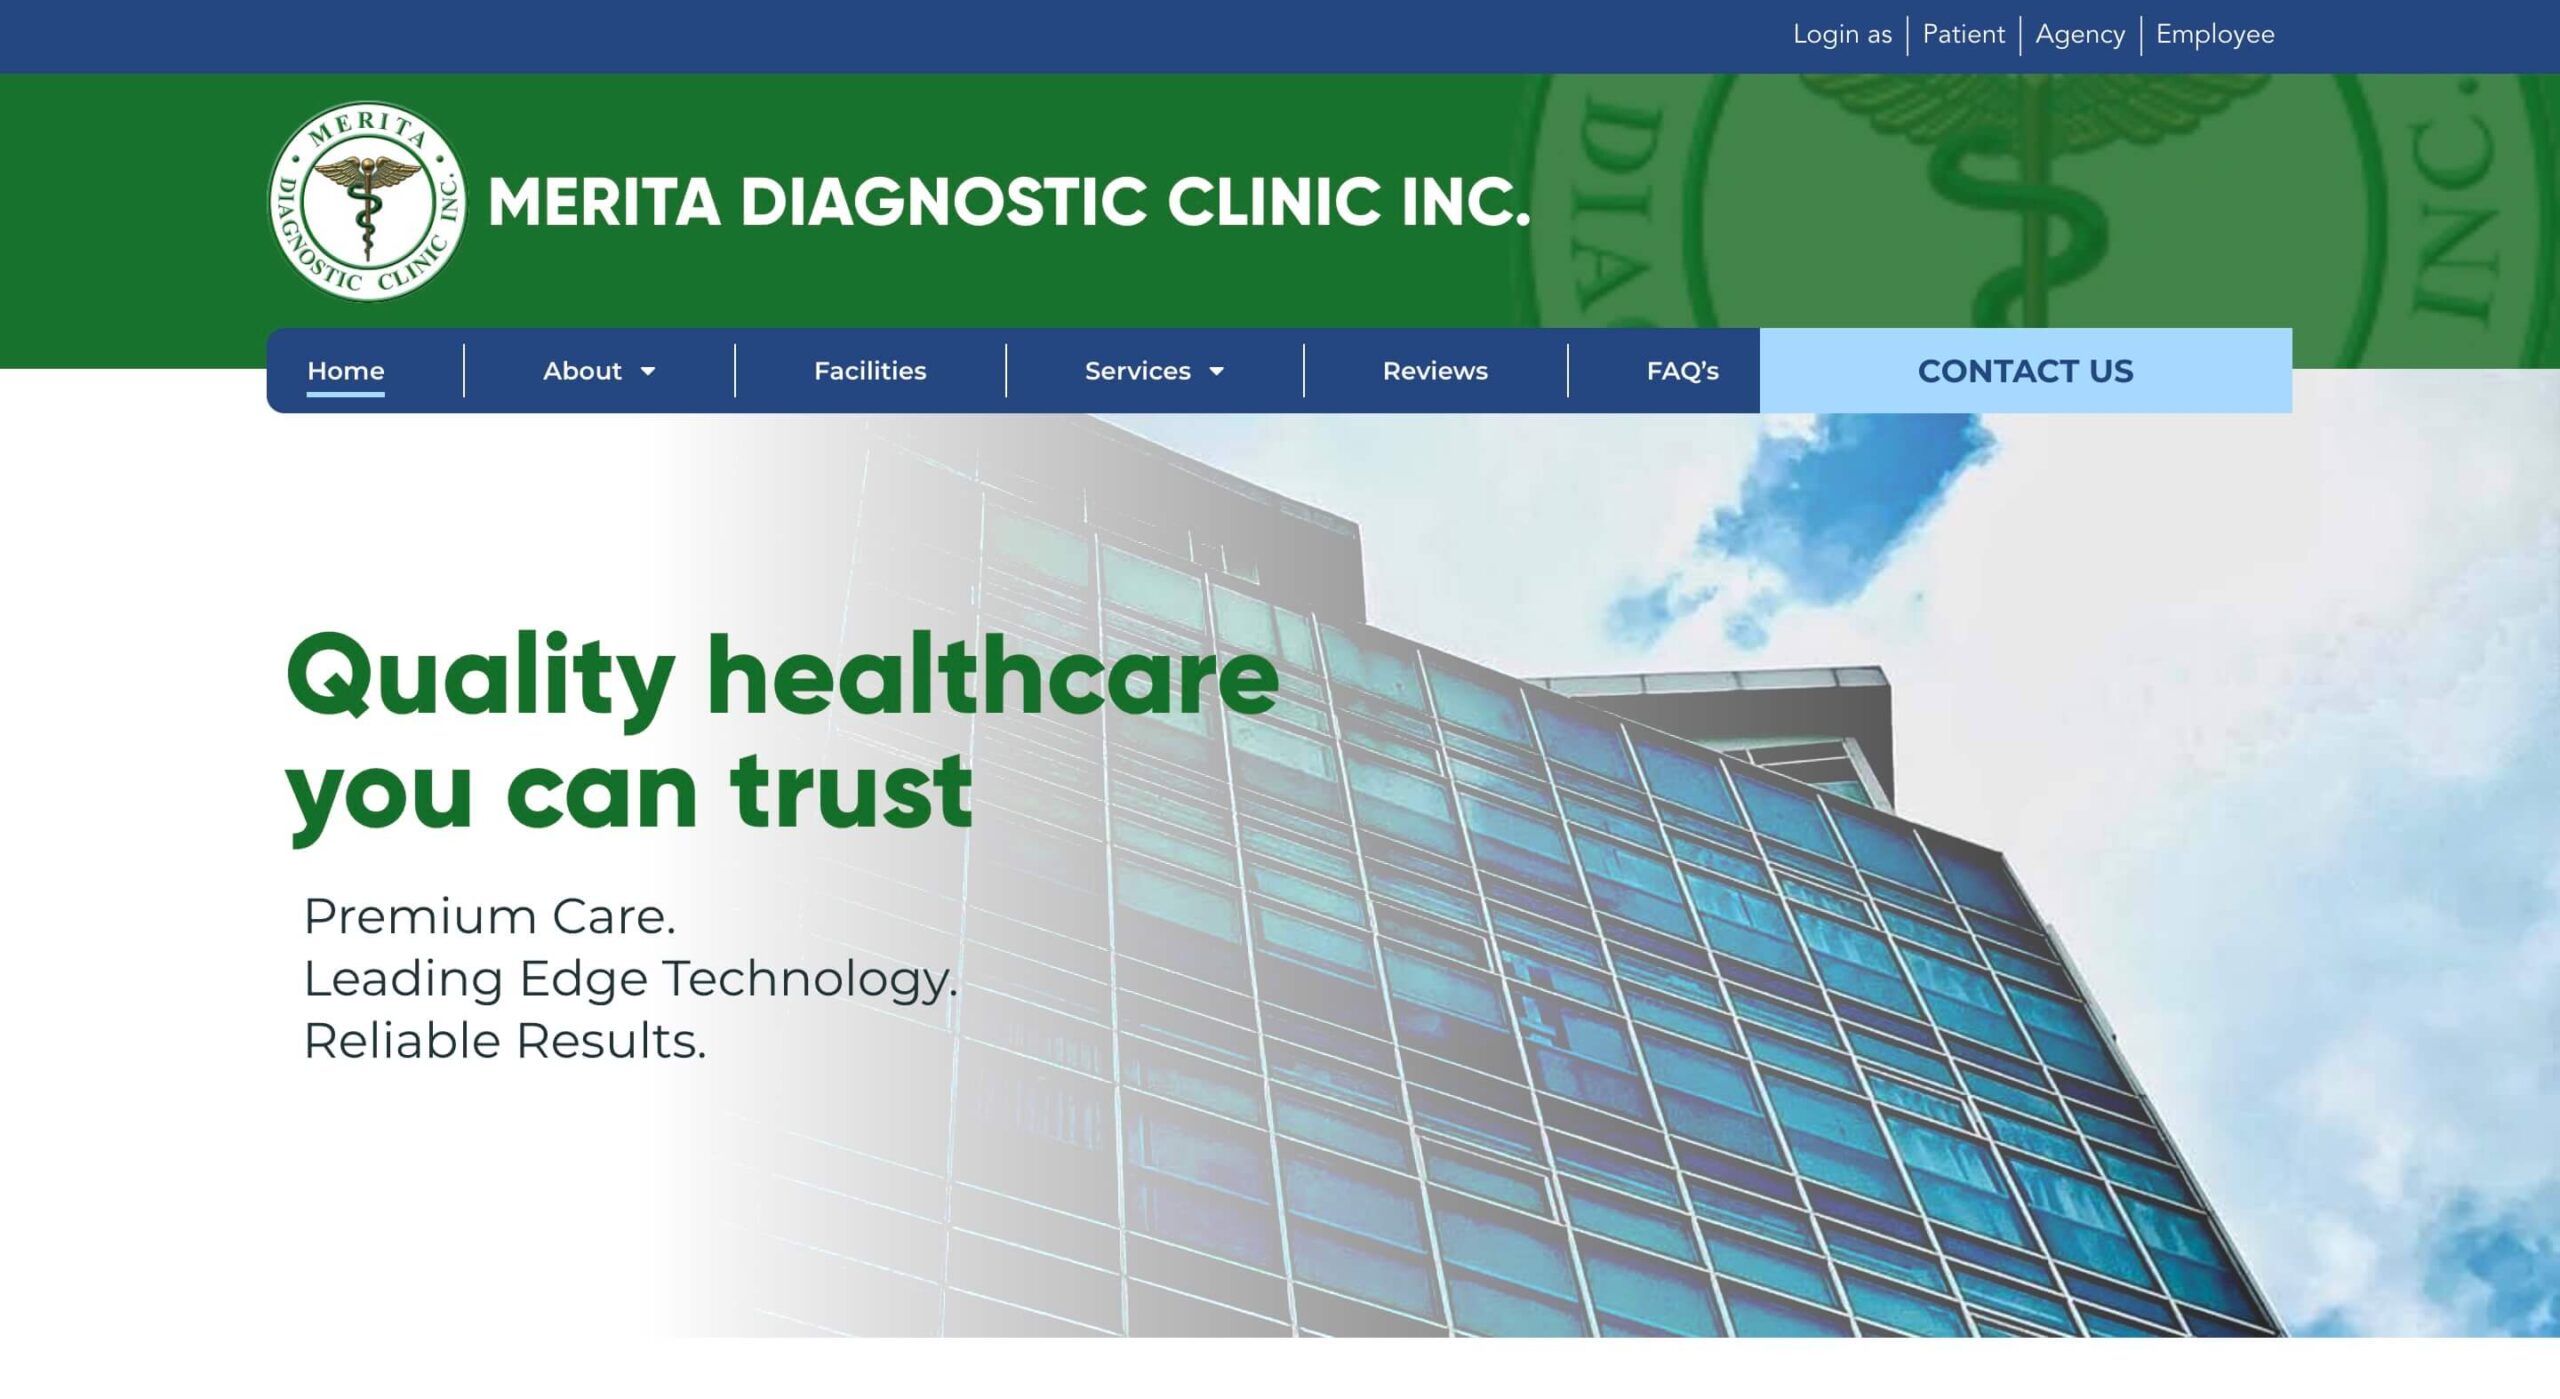 Merita Diagnostic Clinic, Inc.